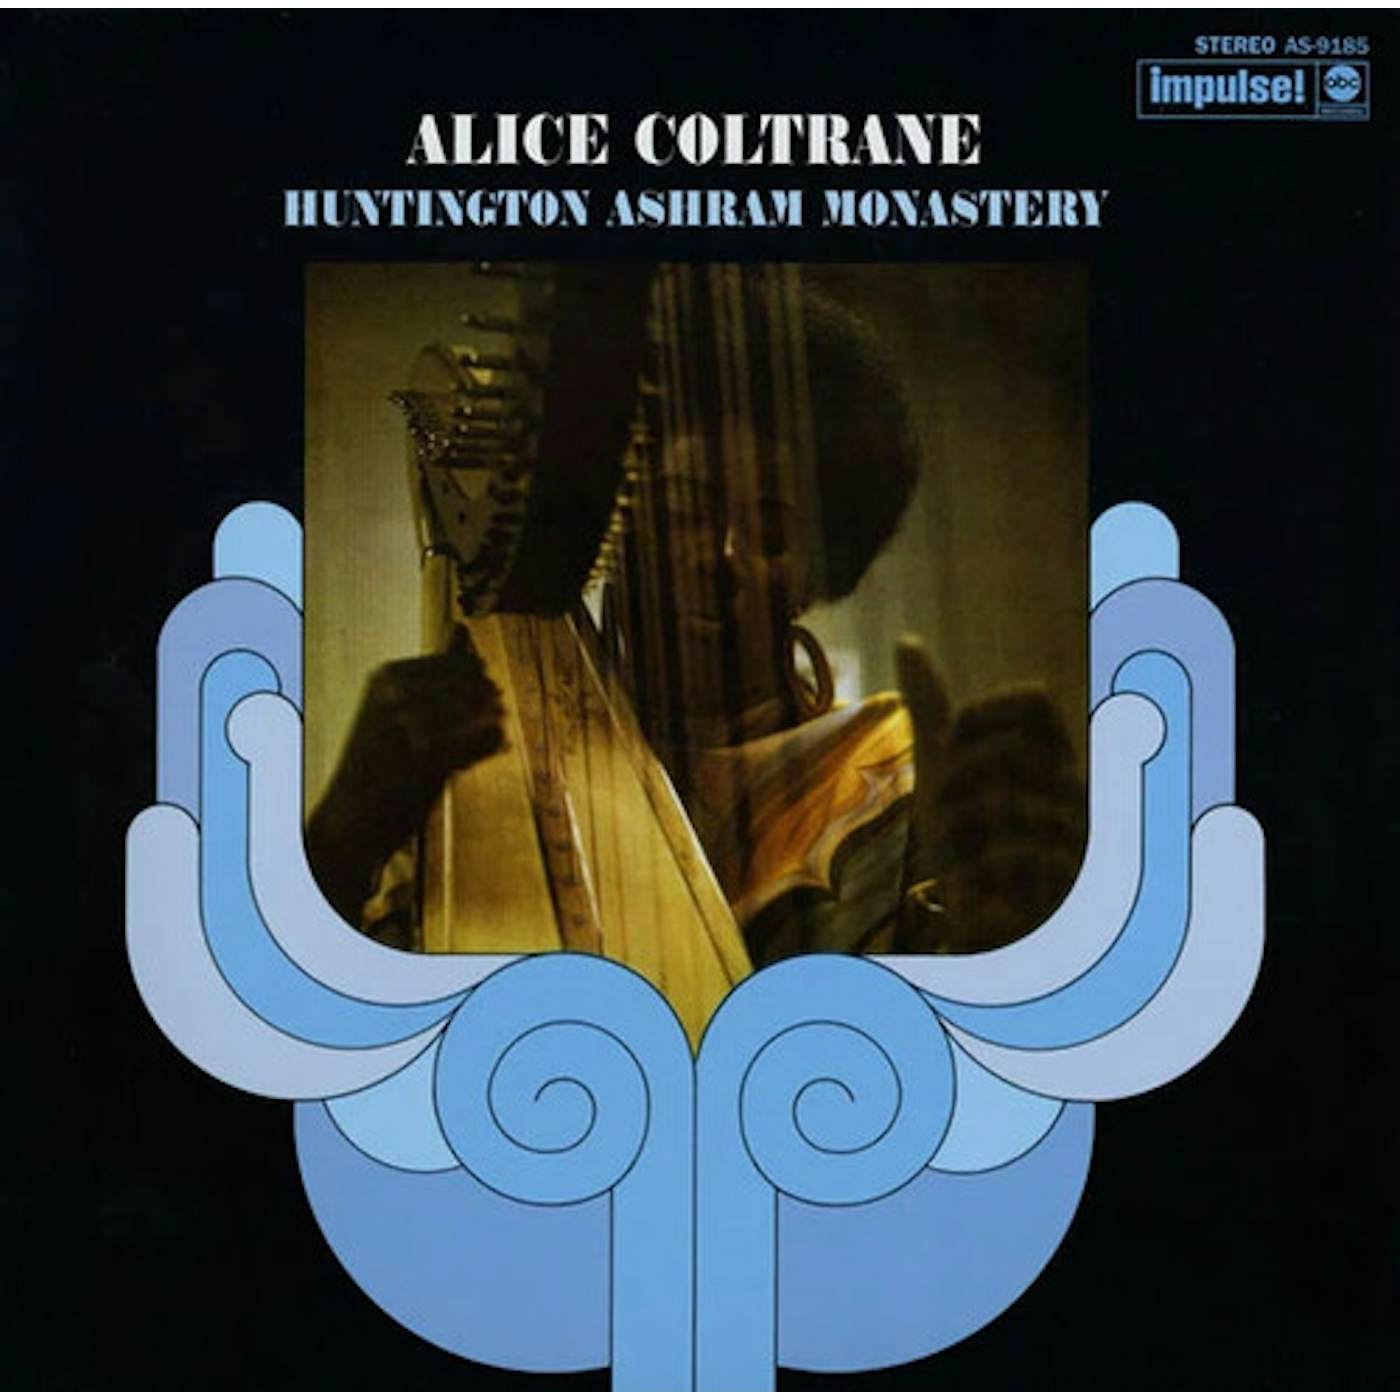 Alice Coltrane HUNTINGTON ASHRAM MONASTERY CD